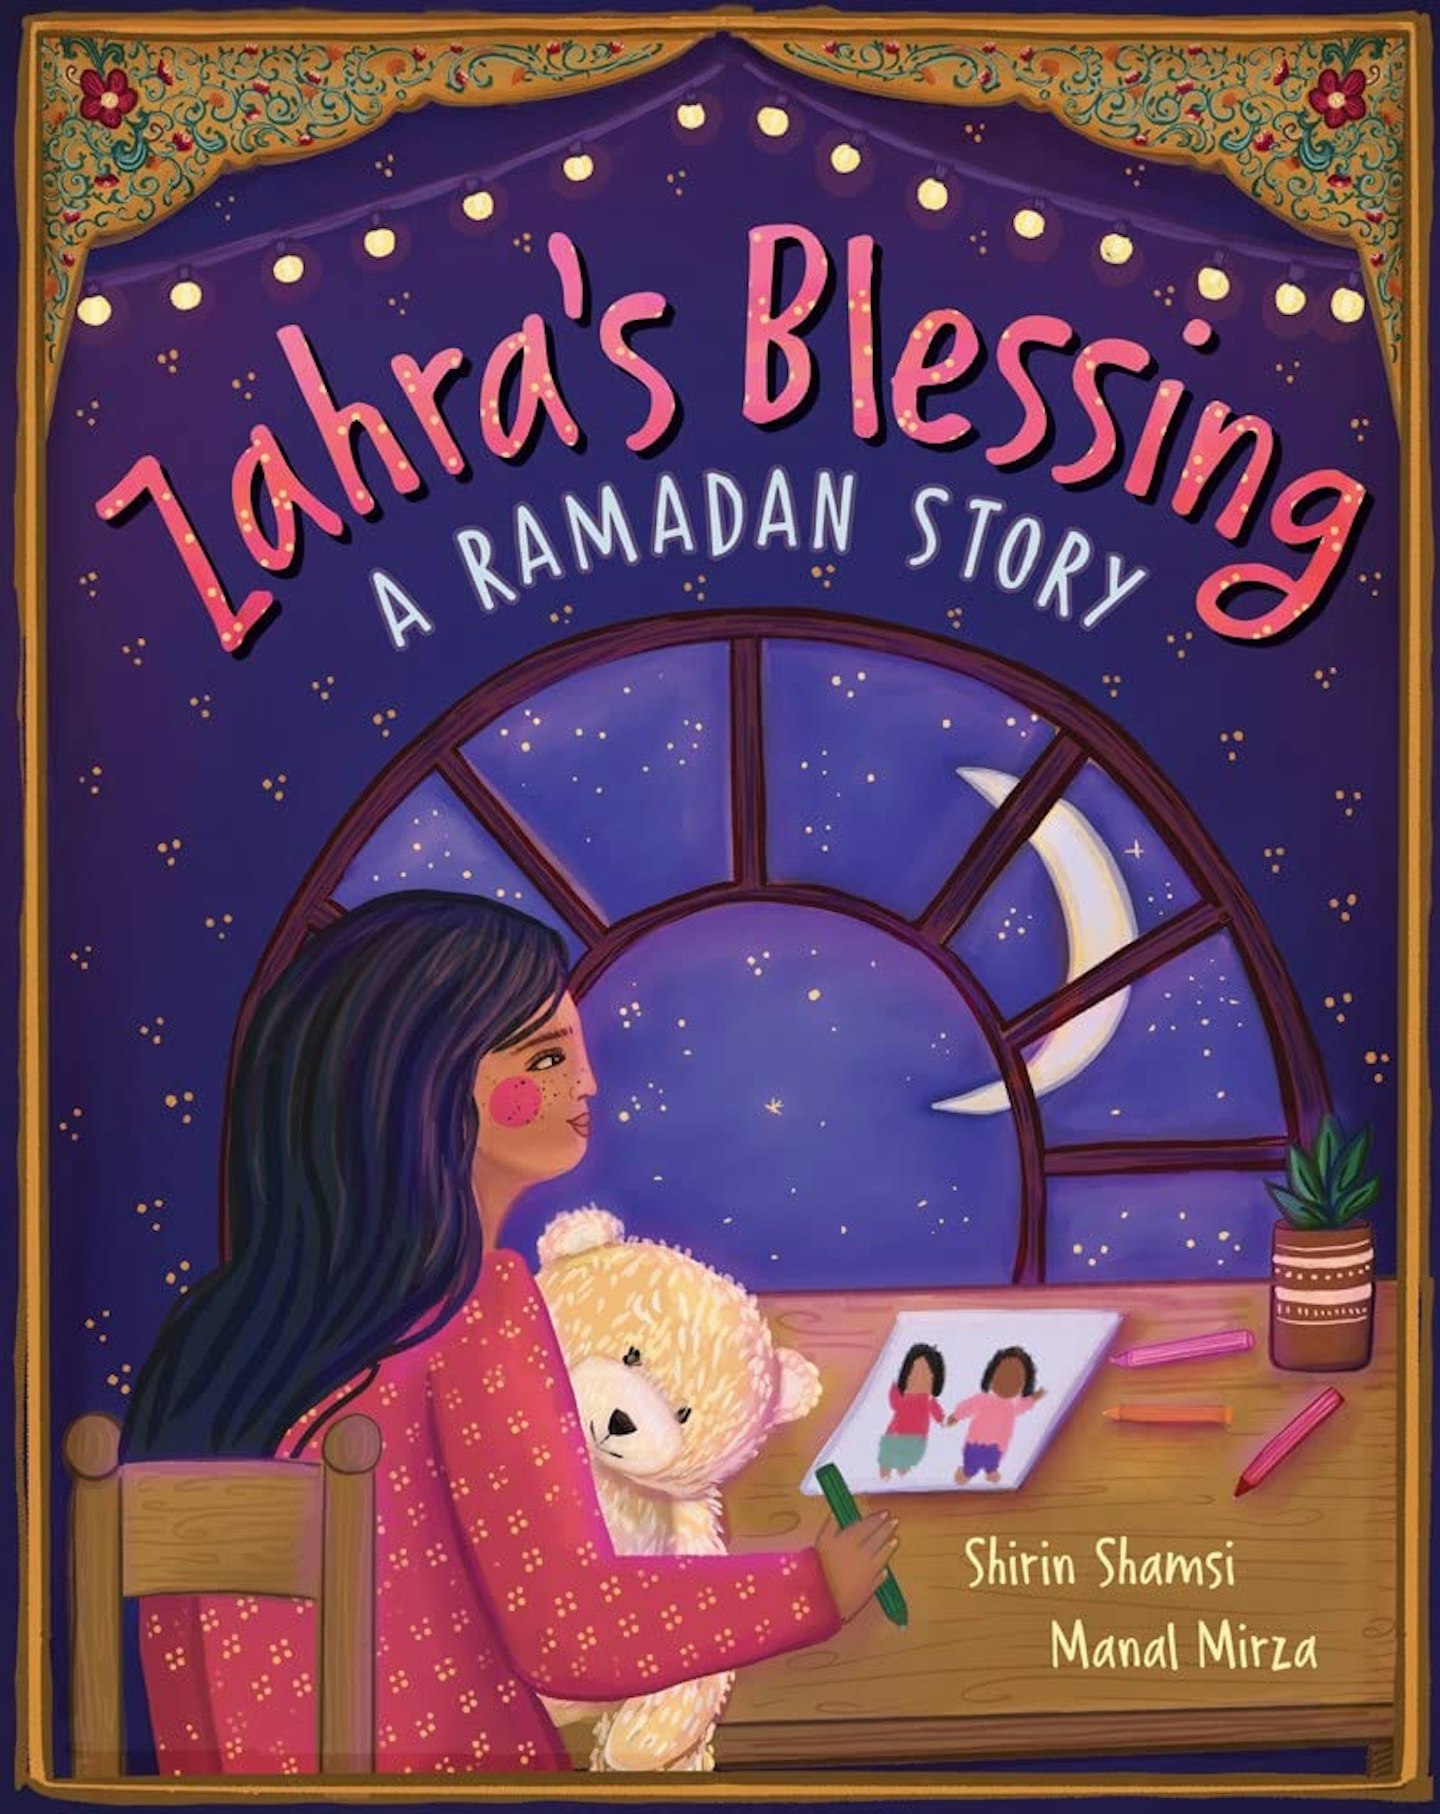 Zahra’s Blessing, A Ramadan Story by Shirin Shamsi